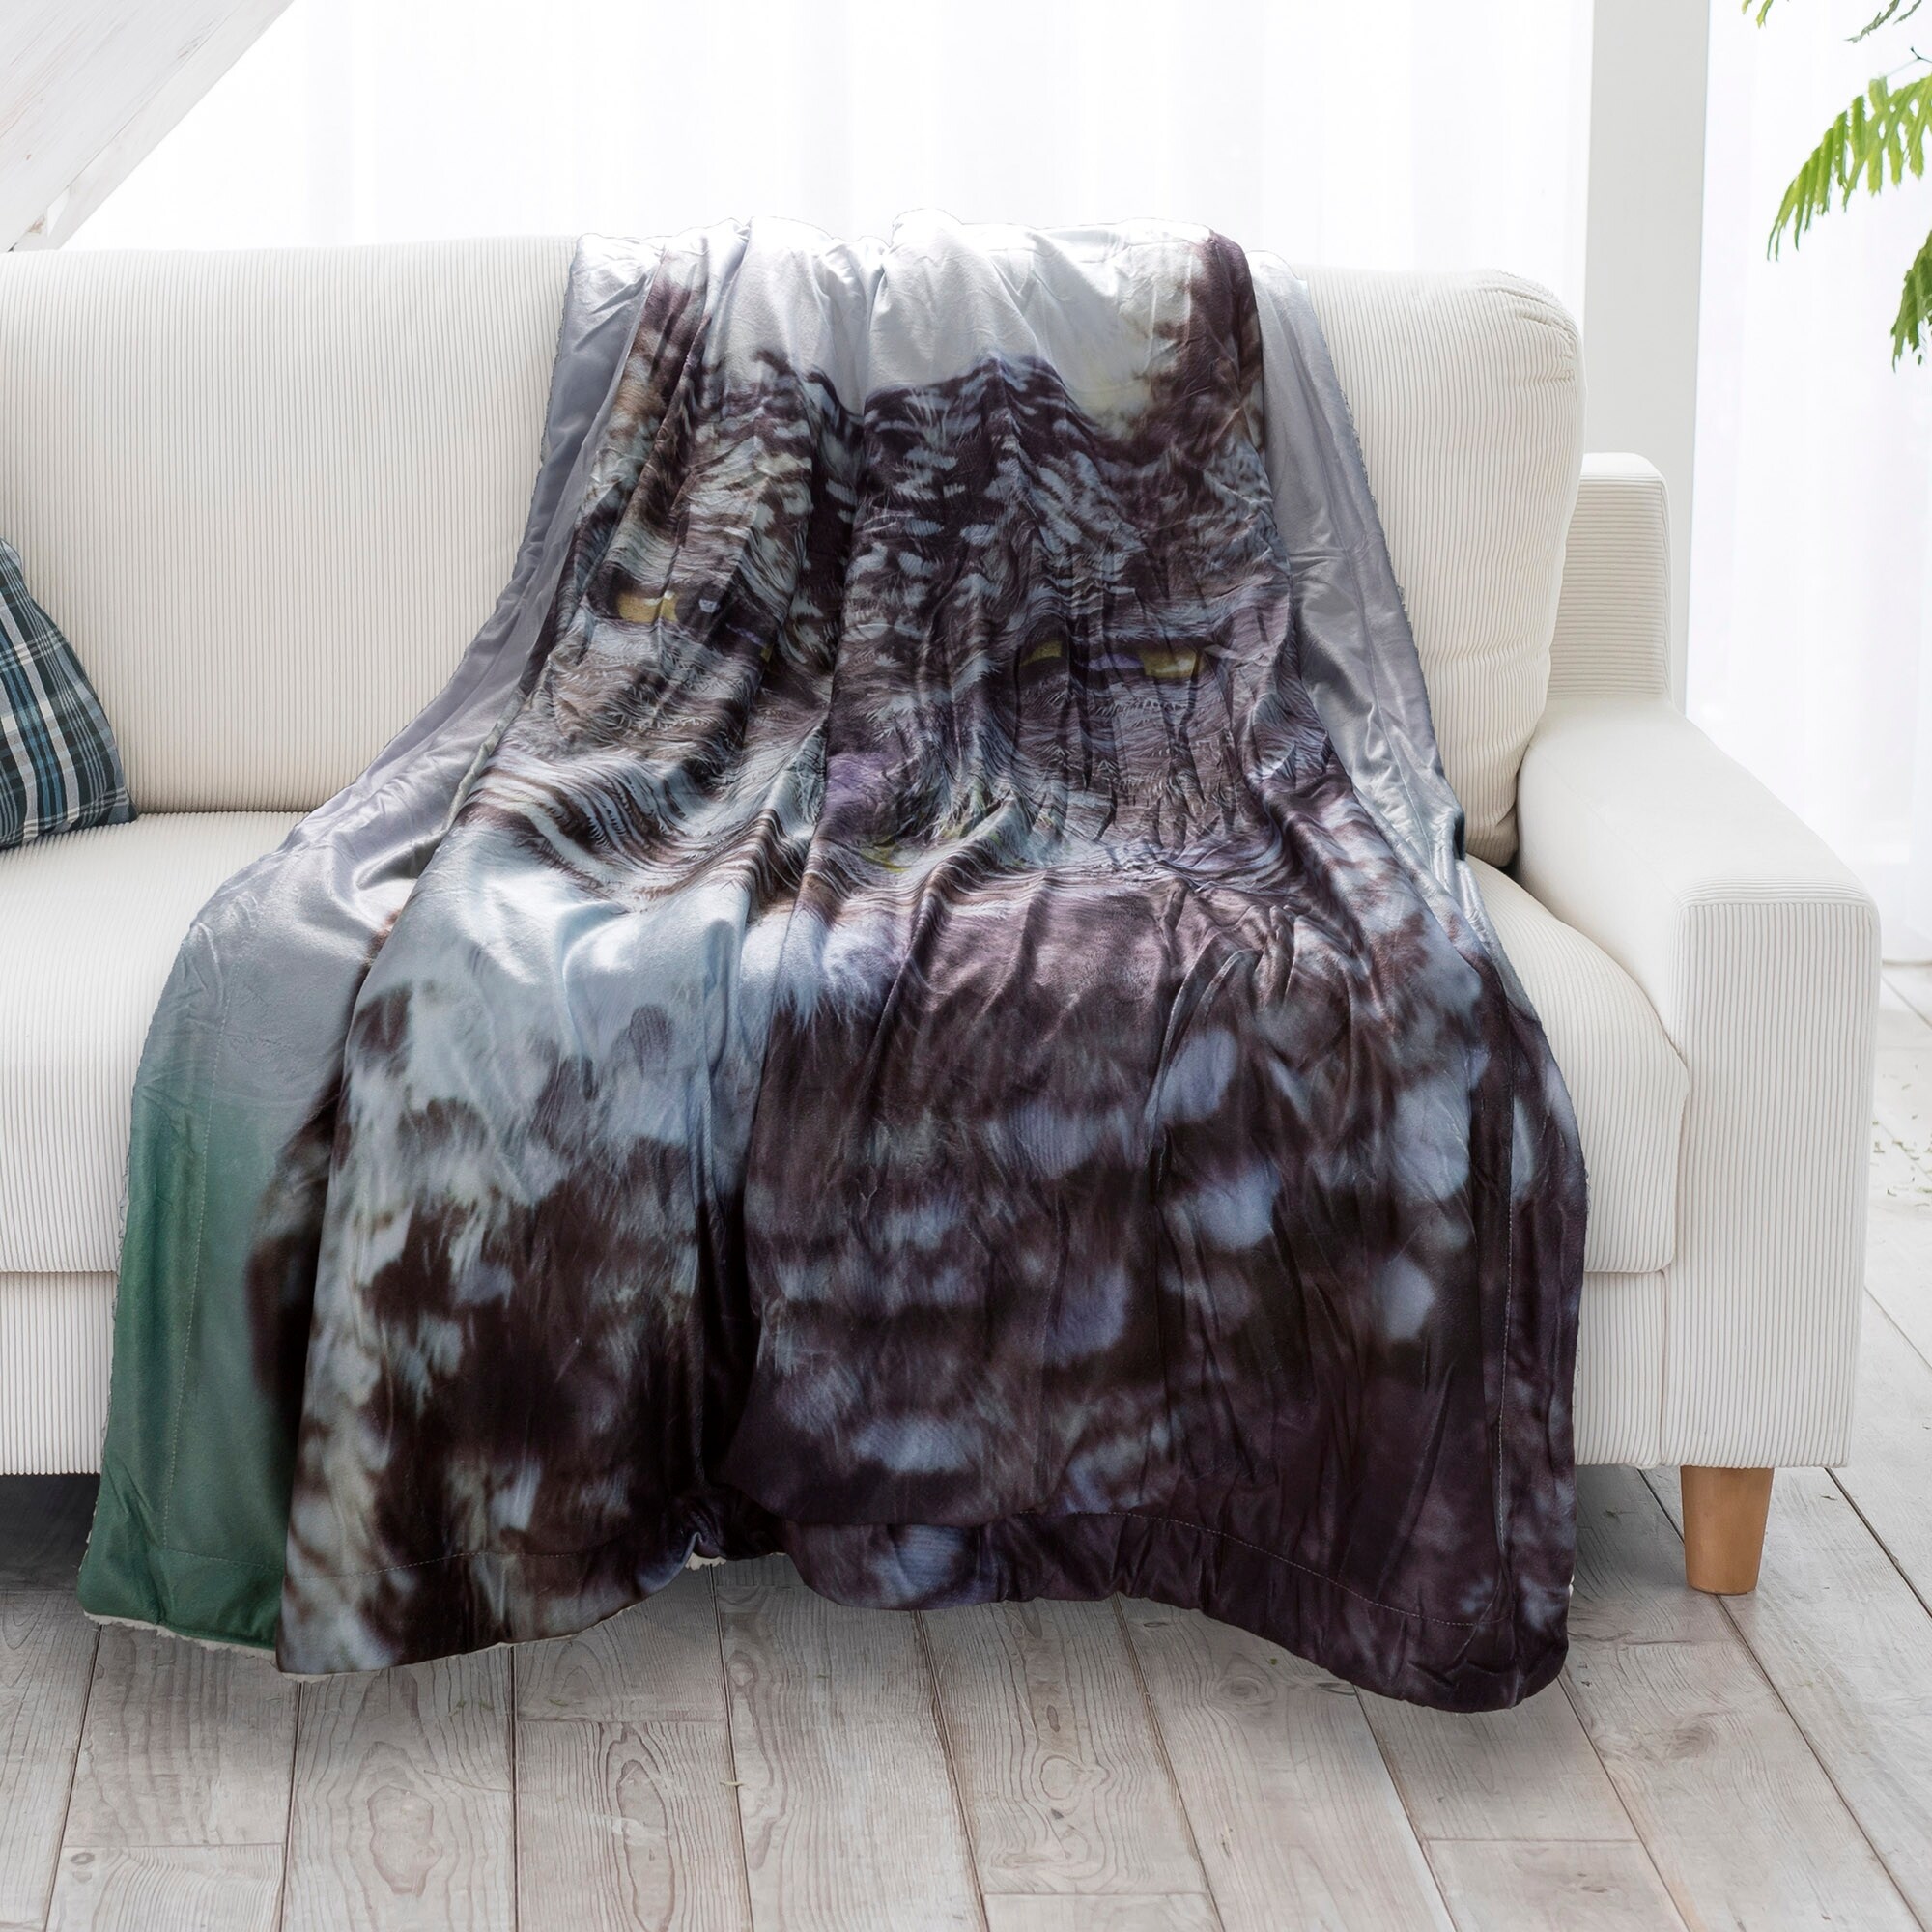 Sherpa Fleece Throw Blanket- Owl Print Pattern by Lavish Home